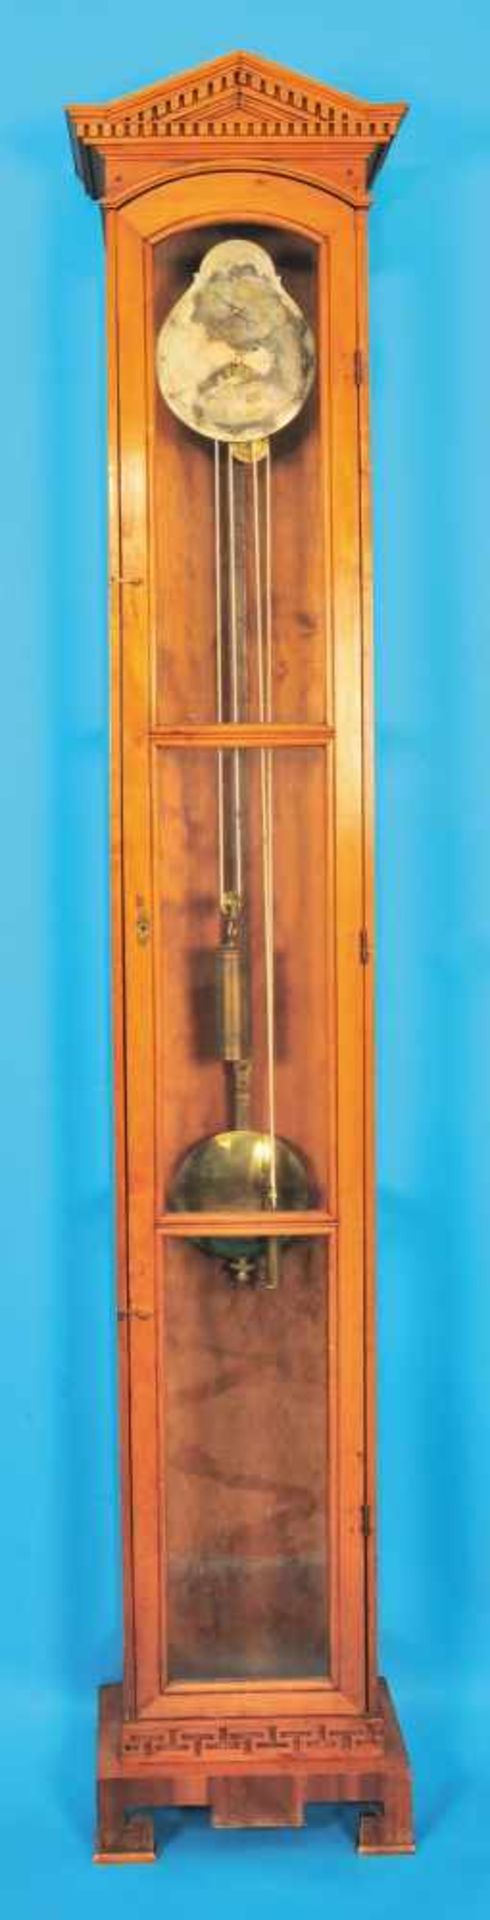 Precision pendulum lang case clock from Saxony mit cross-shape movement and Huygens'schem winding